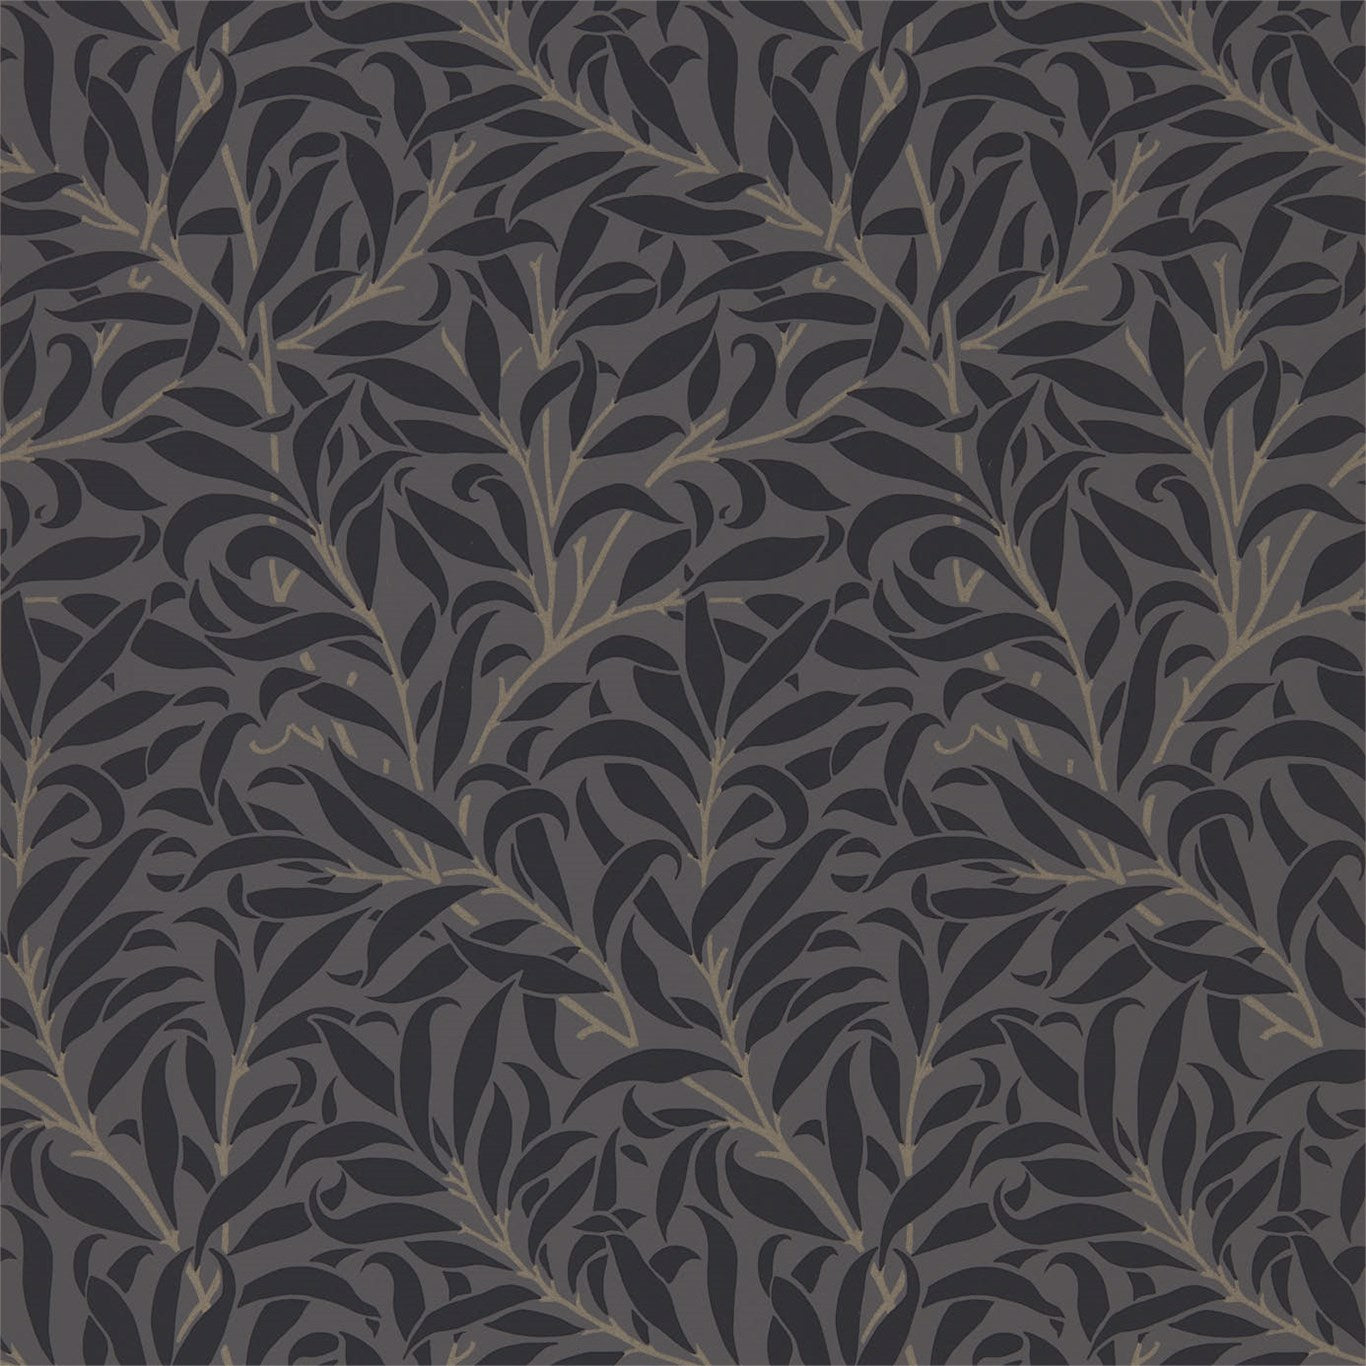 Pure Willow Bough Charcoal/Black Wallpaper DMPU216026 by Morris & Co